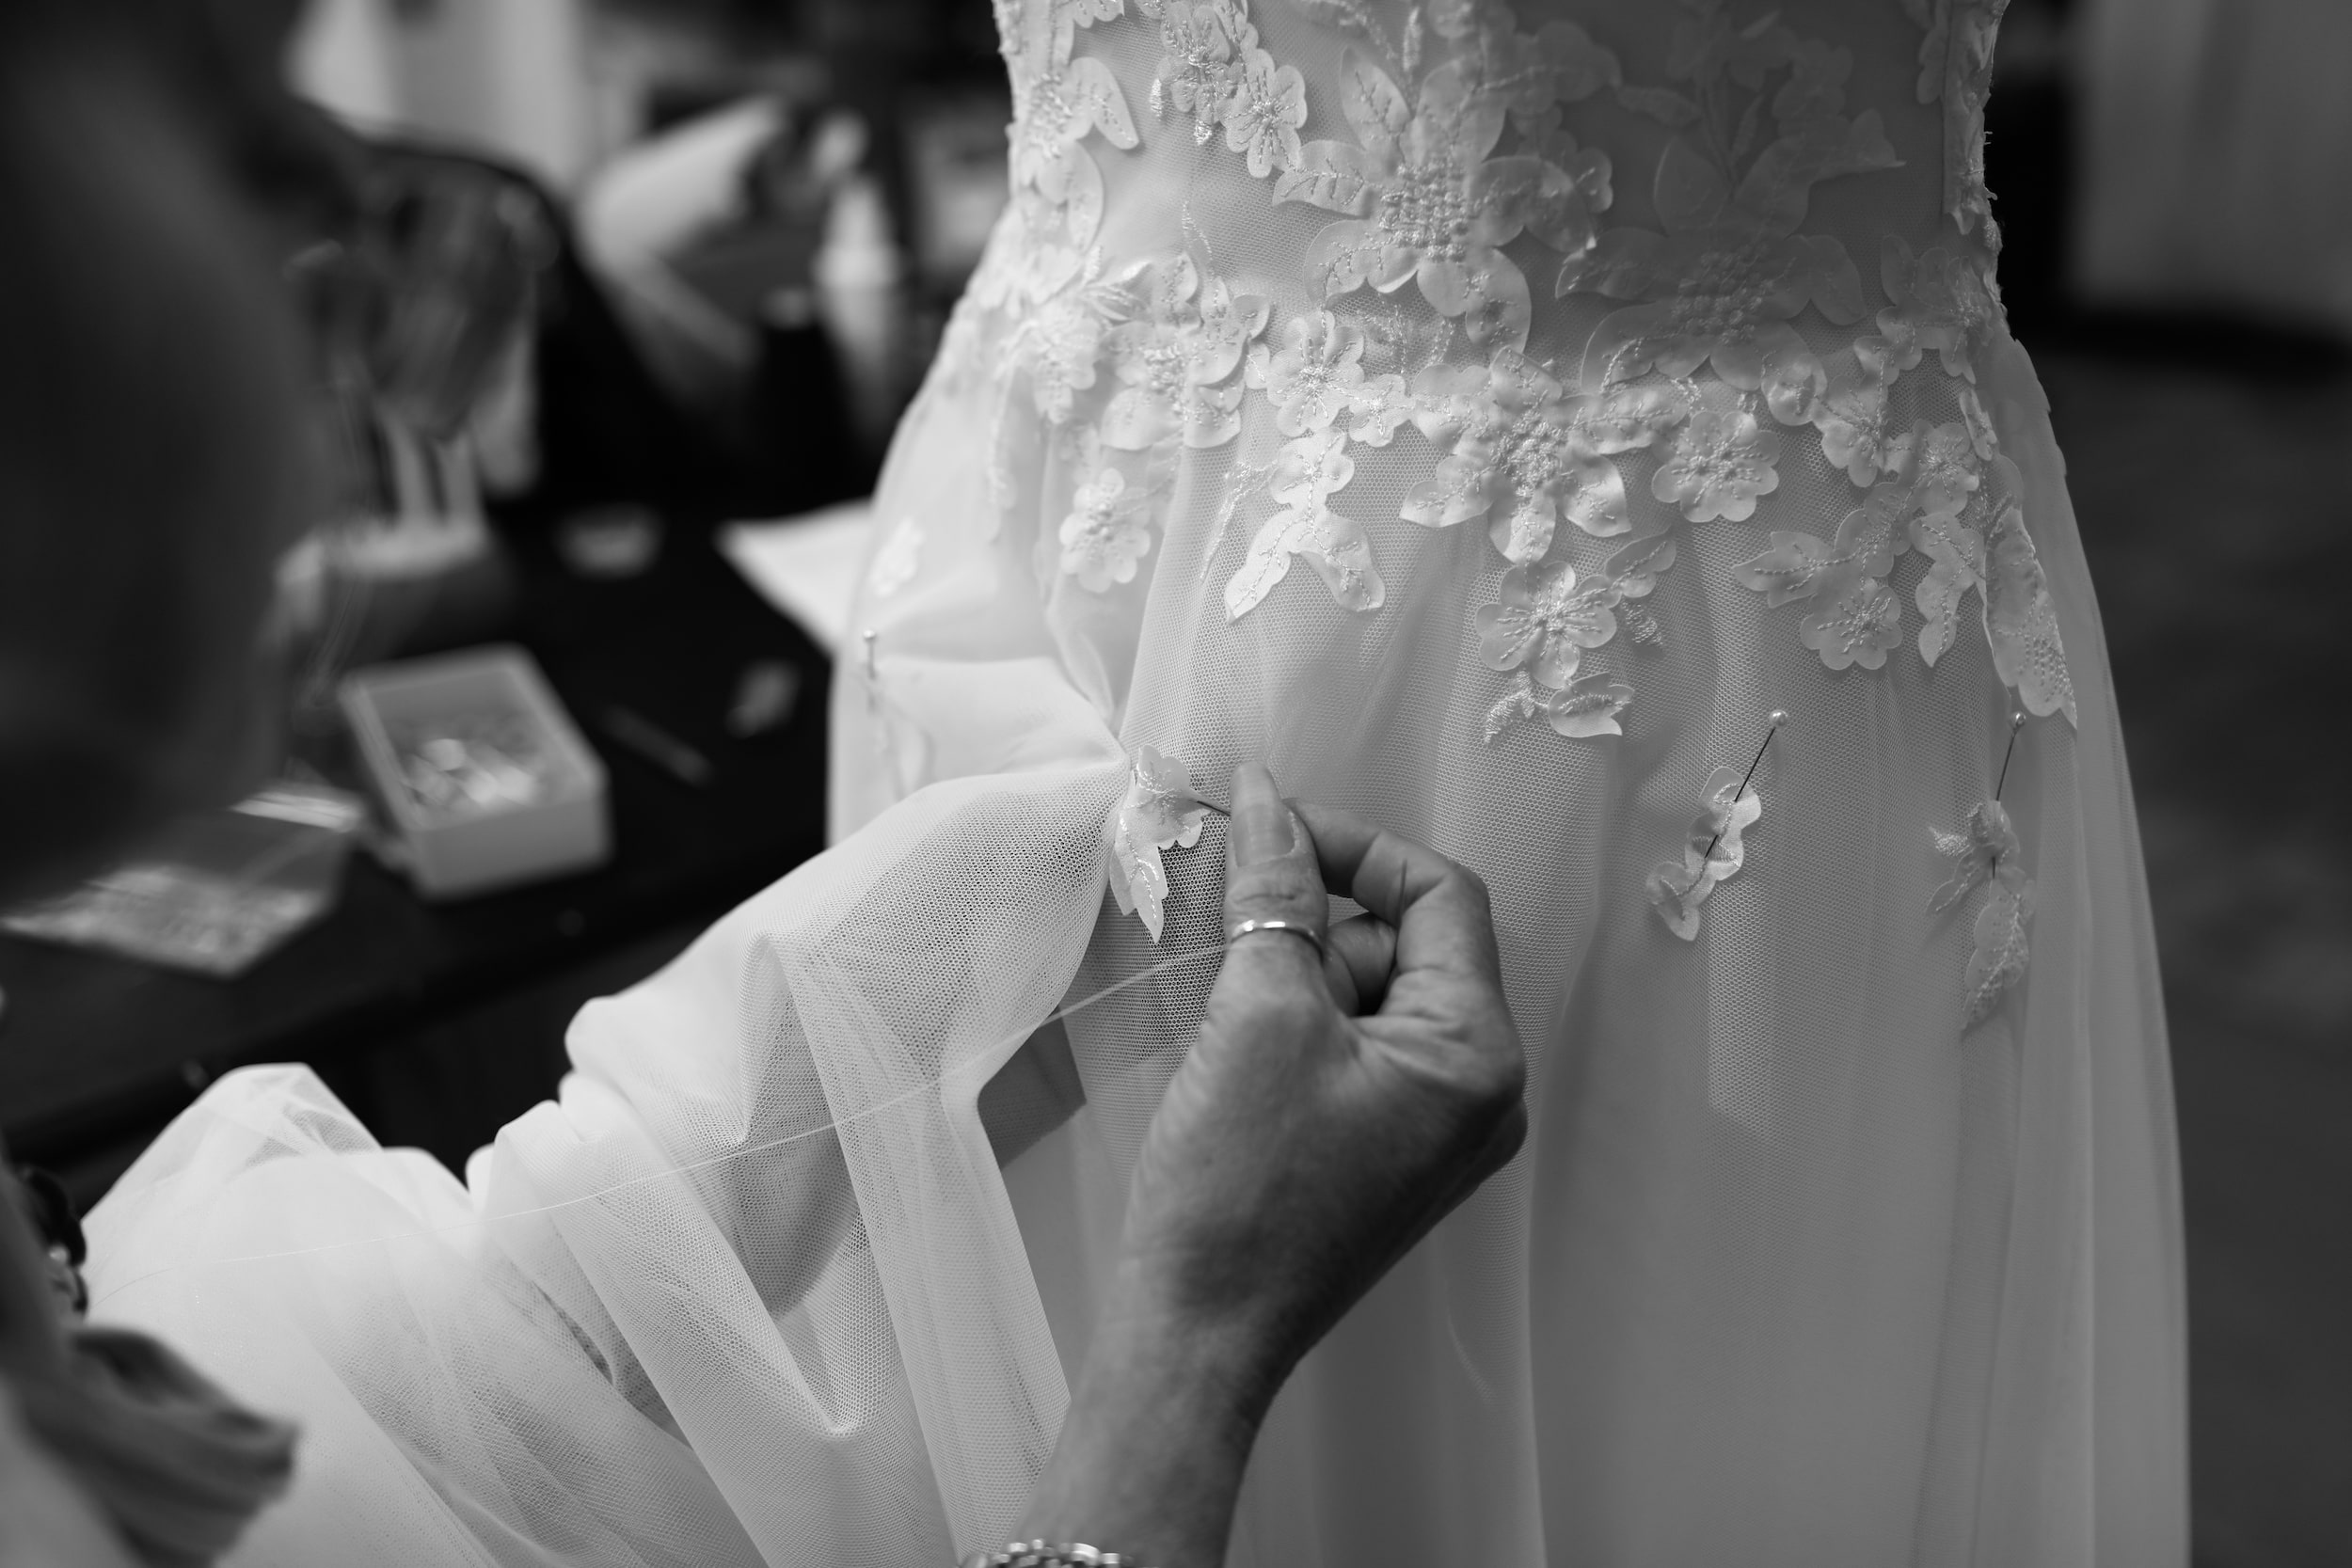 Hand-worker stitching lace onto a custom wedding dress